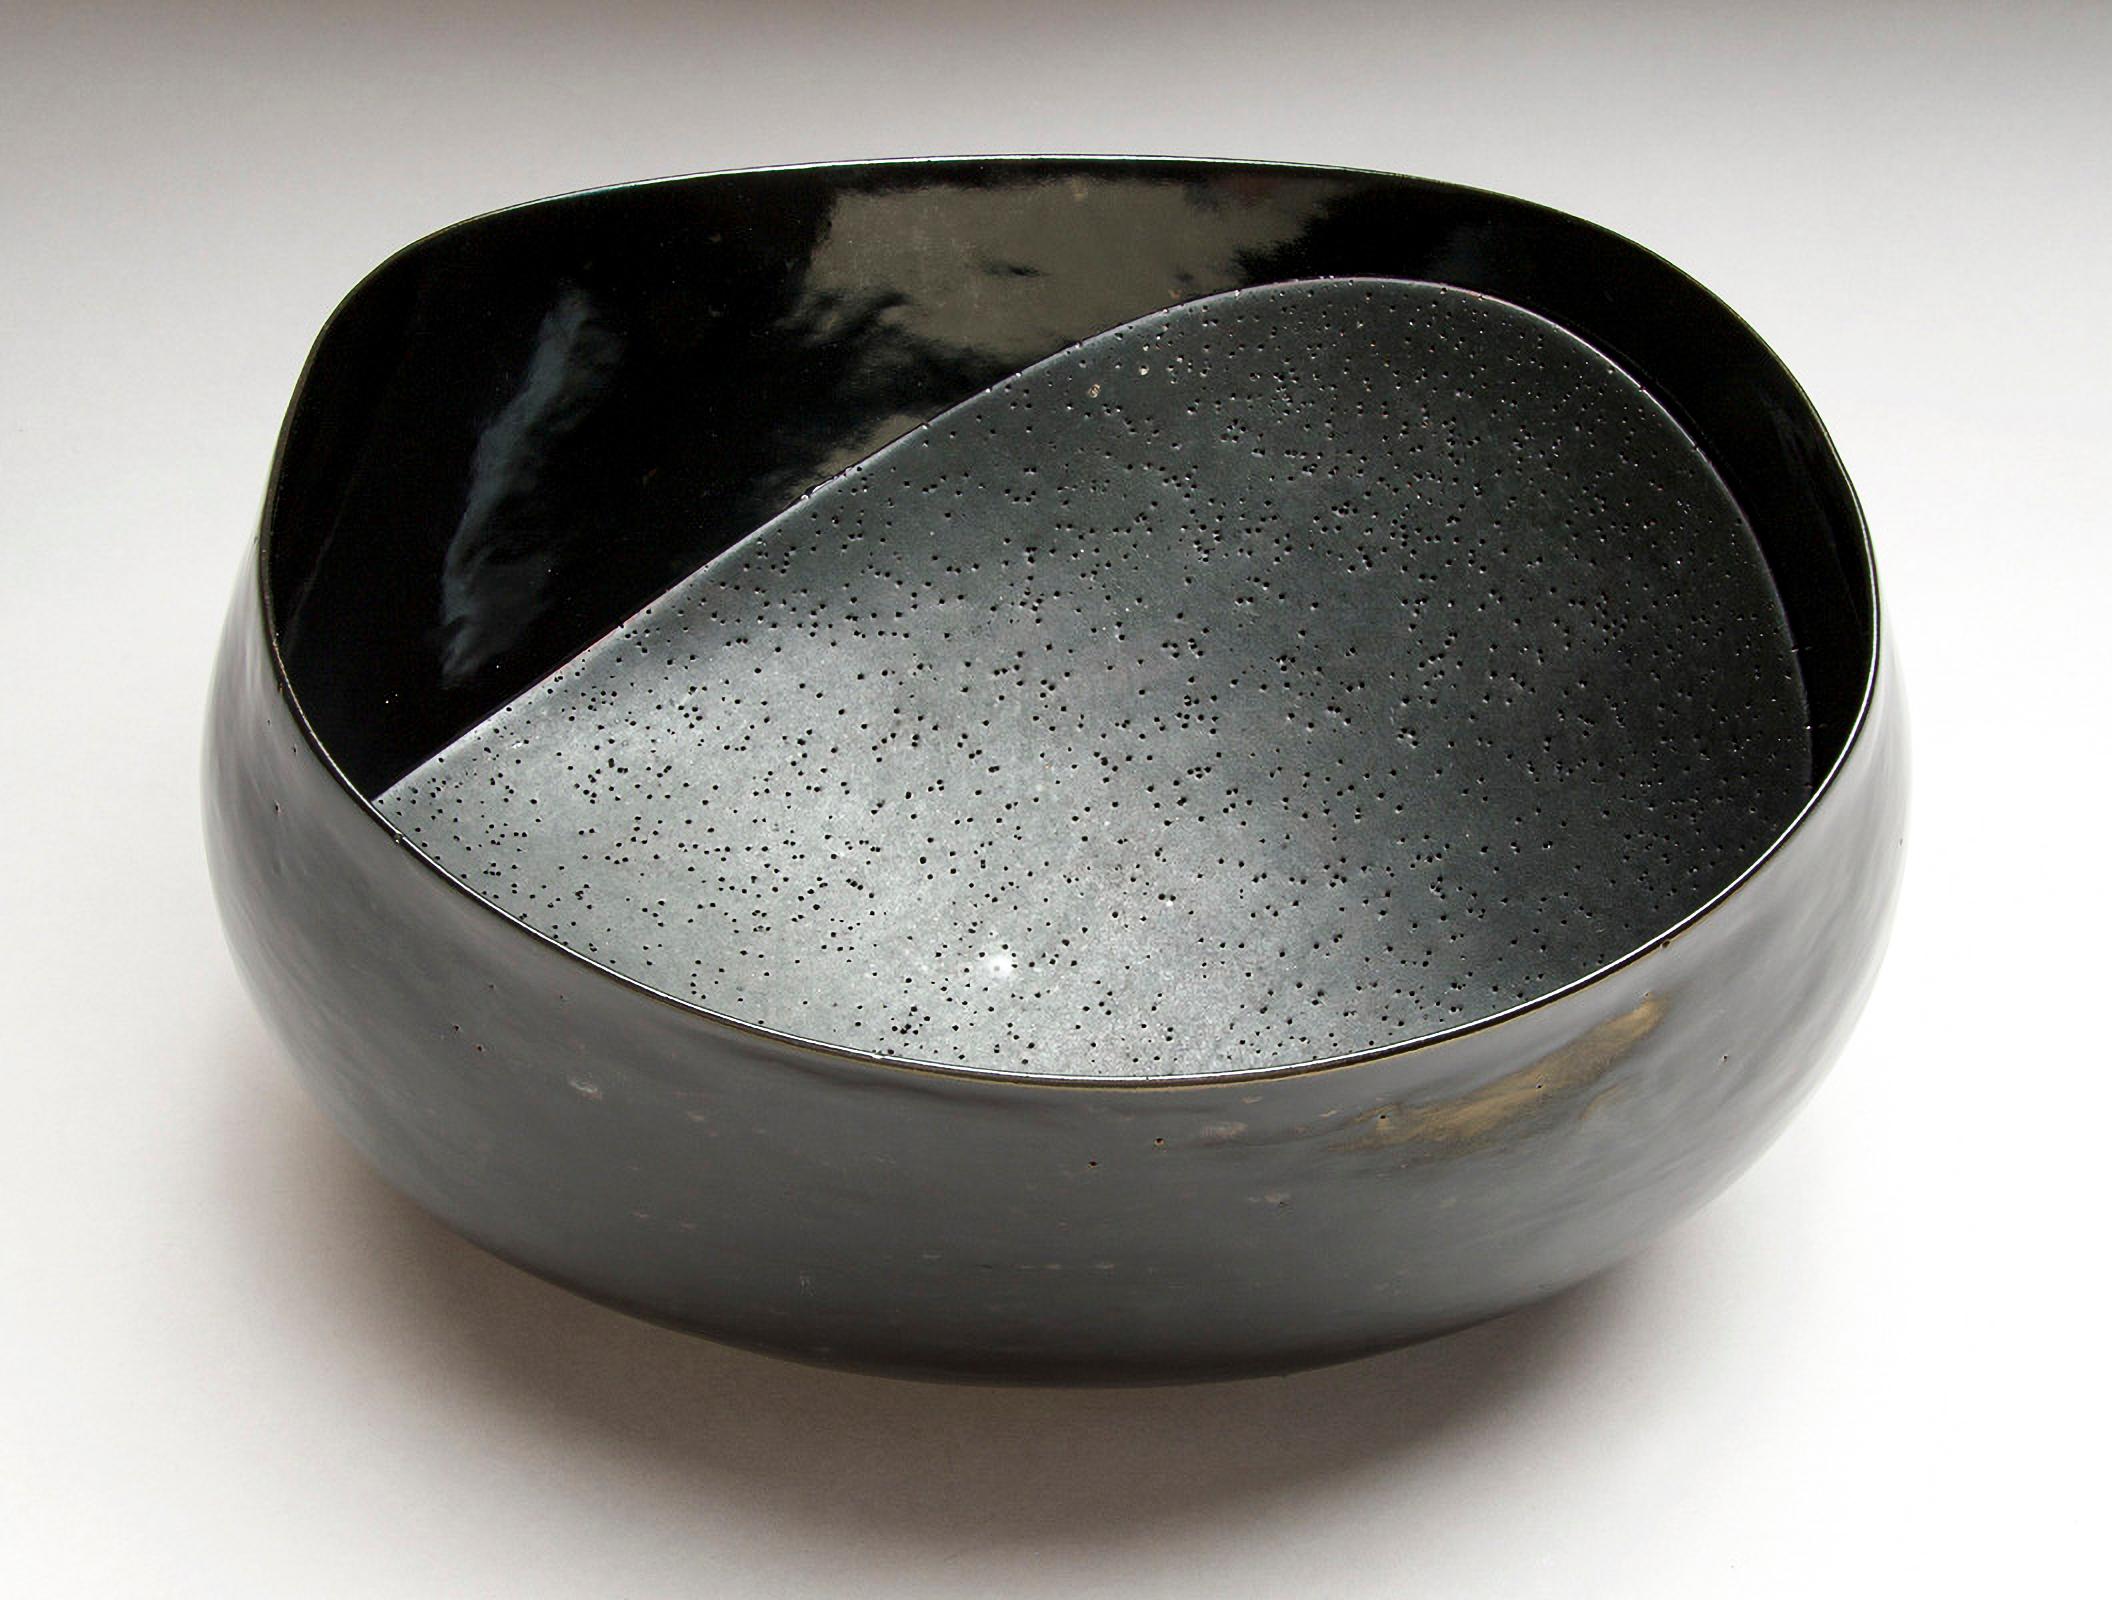 Afterlife No 4  - glossy black, grey, nature inspired, elongated, ceramic vessel - Sculpture by Steven Heinemann